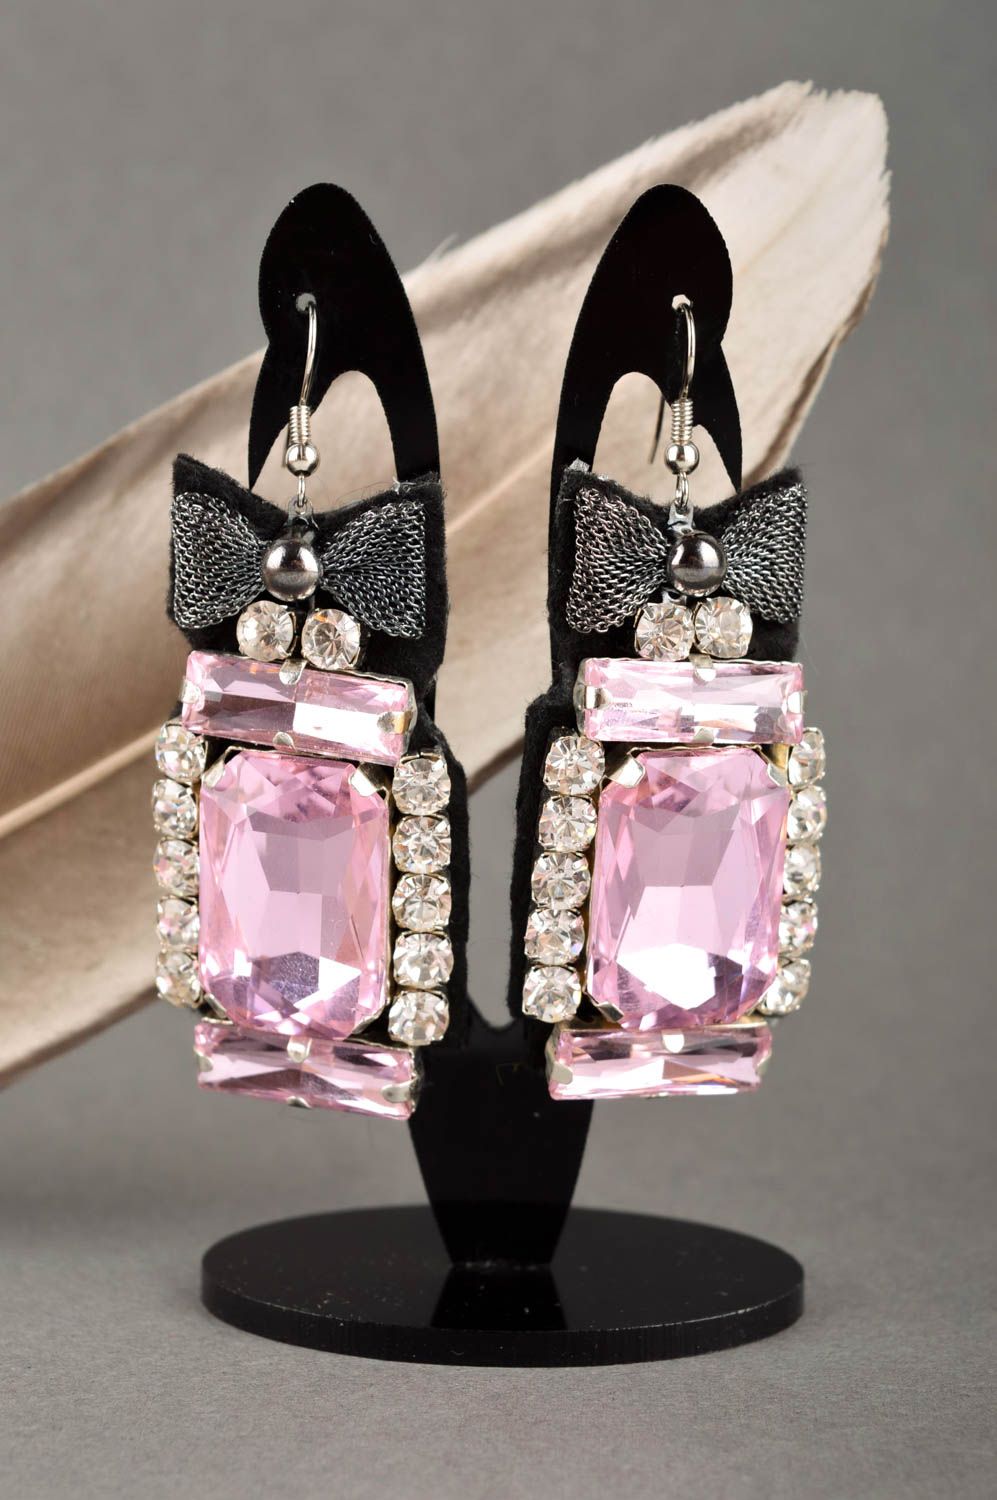 Crystal earrings designer earrings handmade jewelry evening earrings for women photo 1